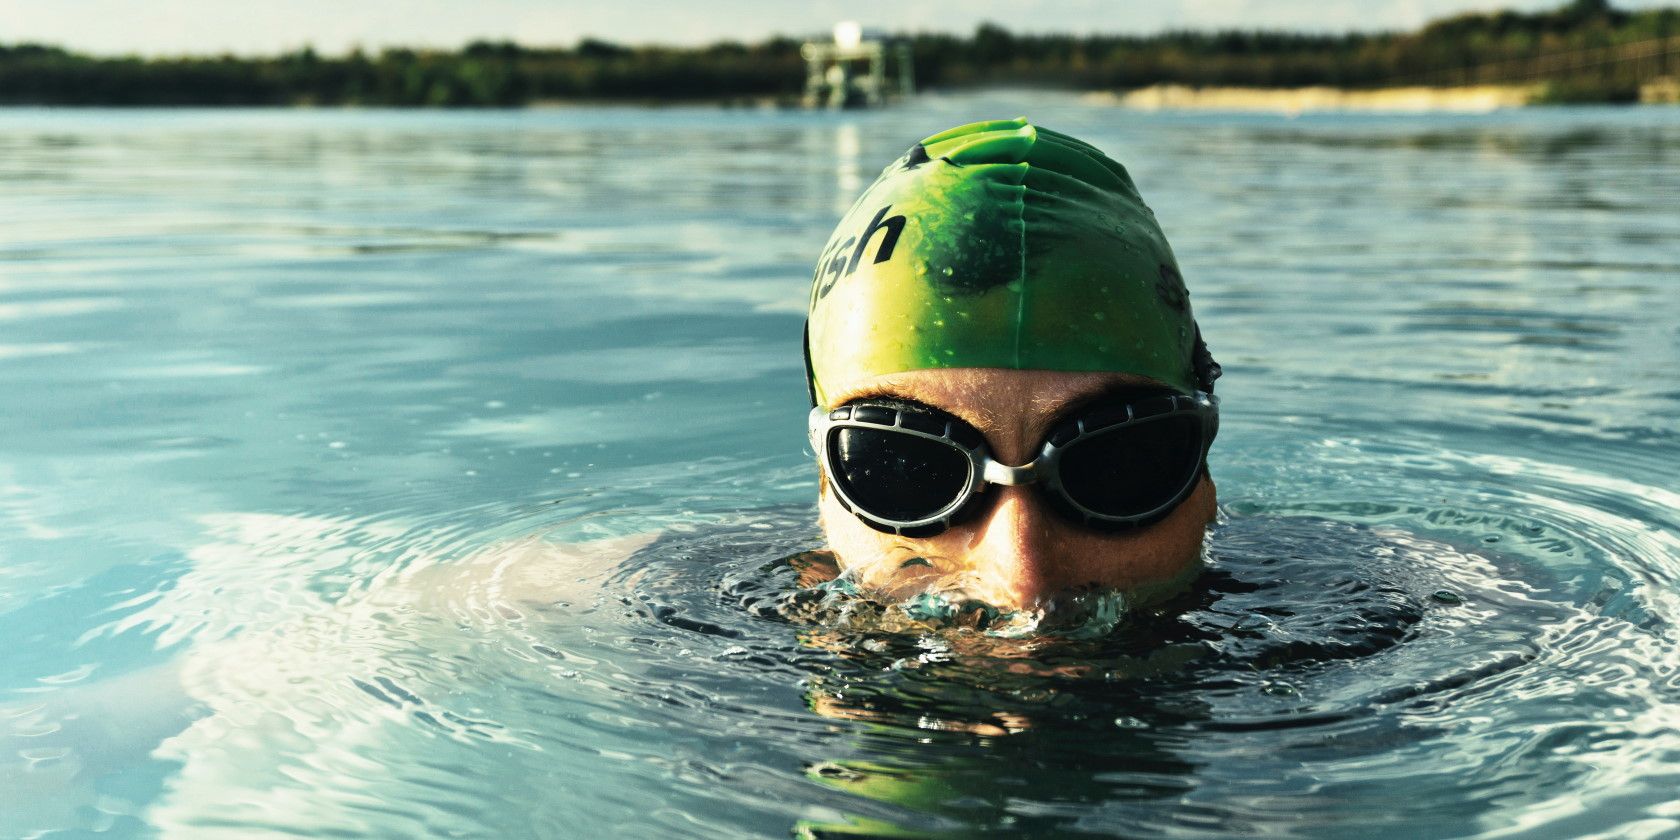 Man swimming in body of water wearing swim goggles